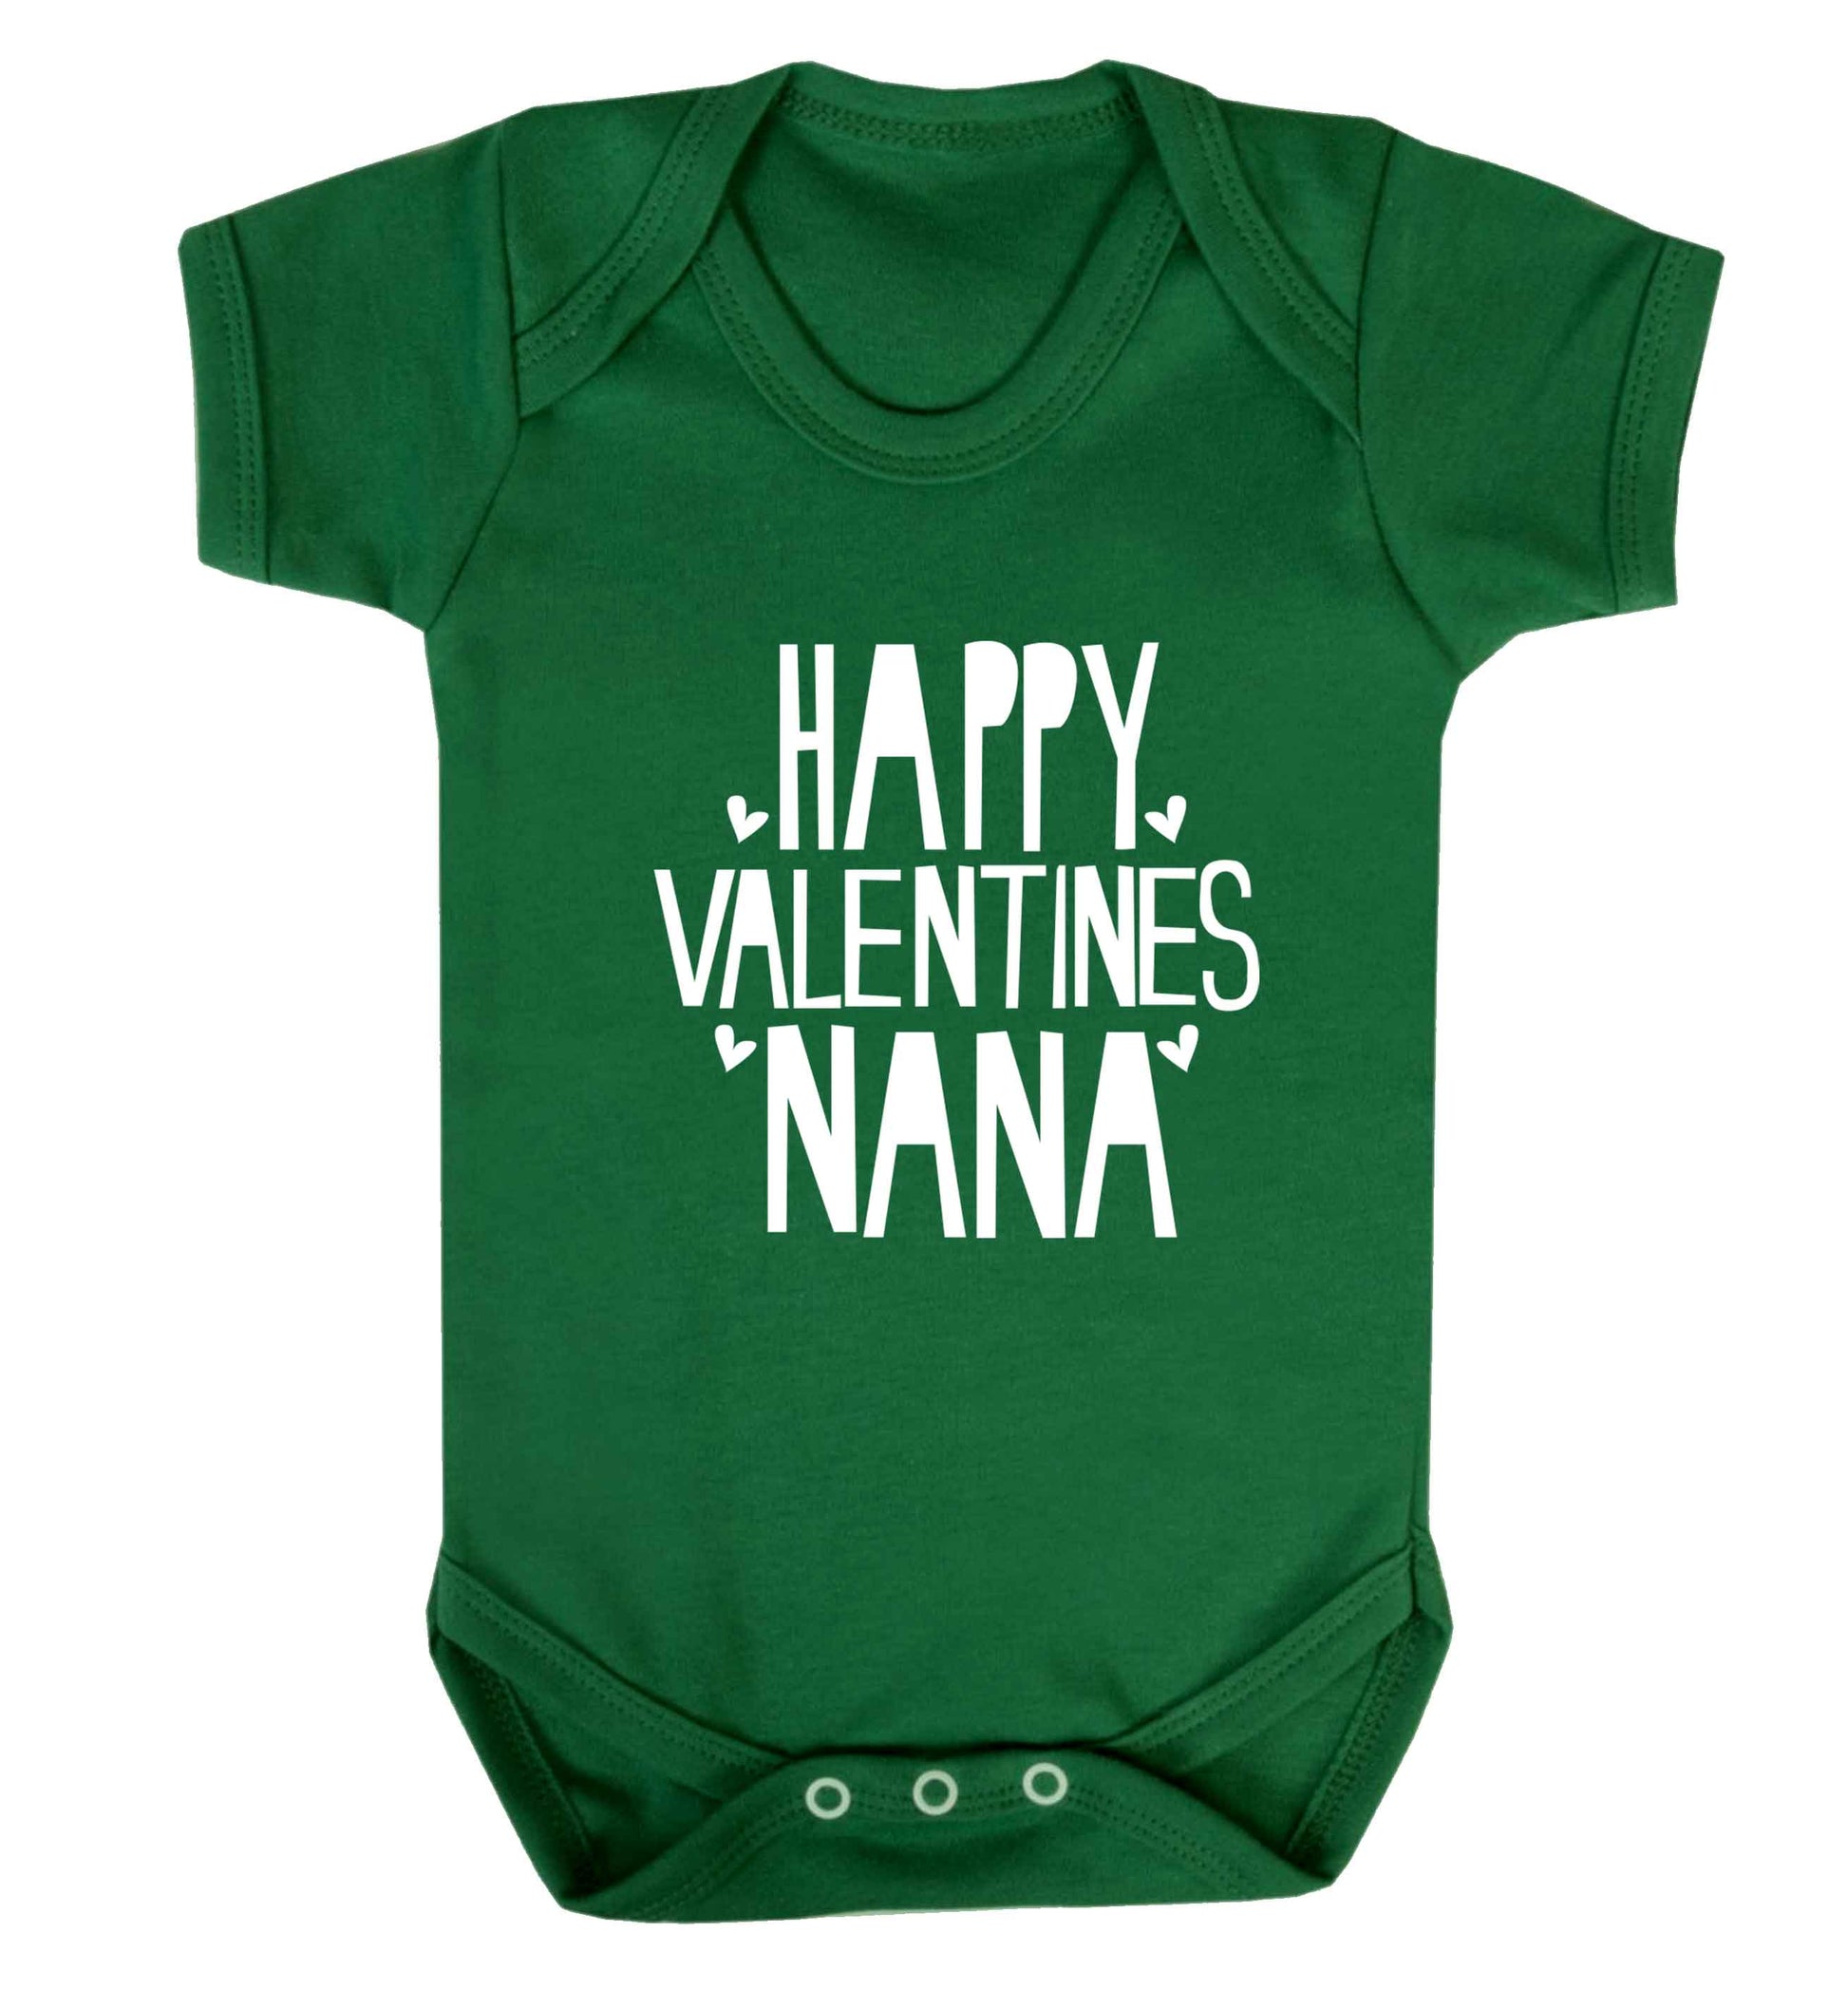 Happy valentines nana baby vest green 18-24 months